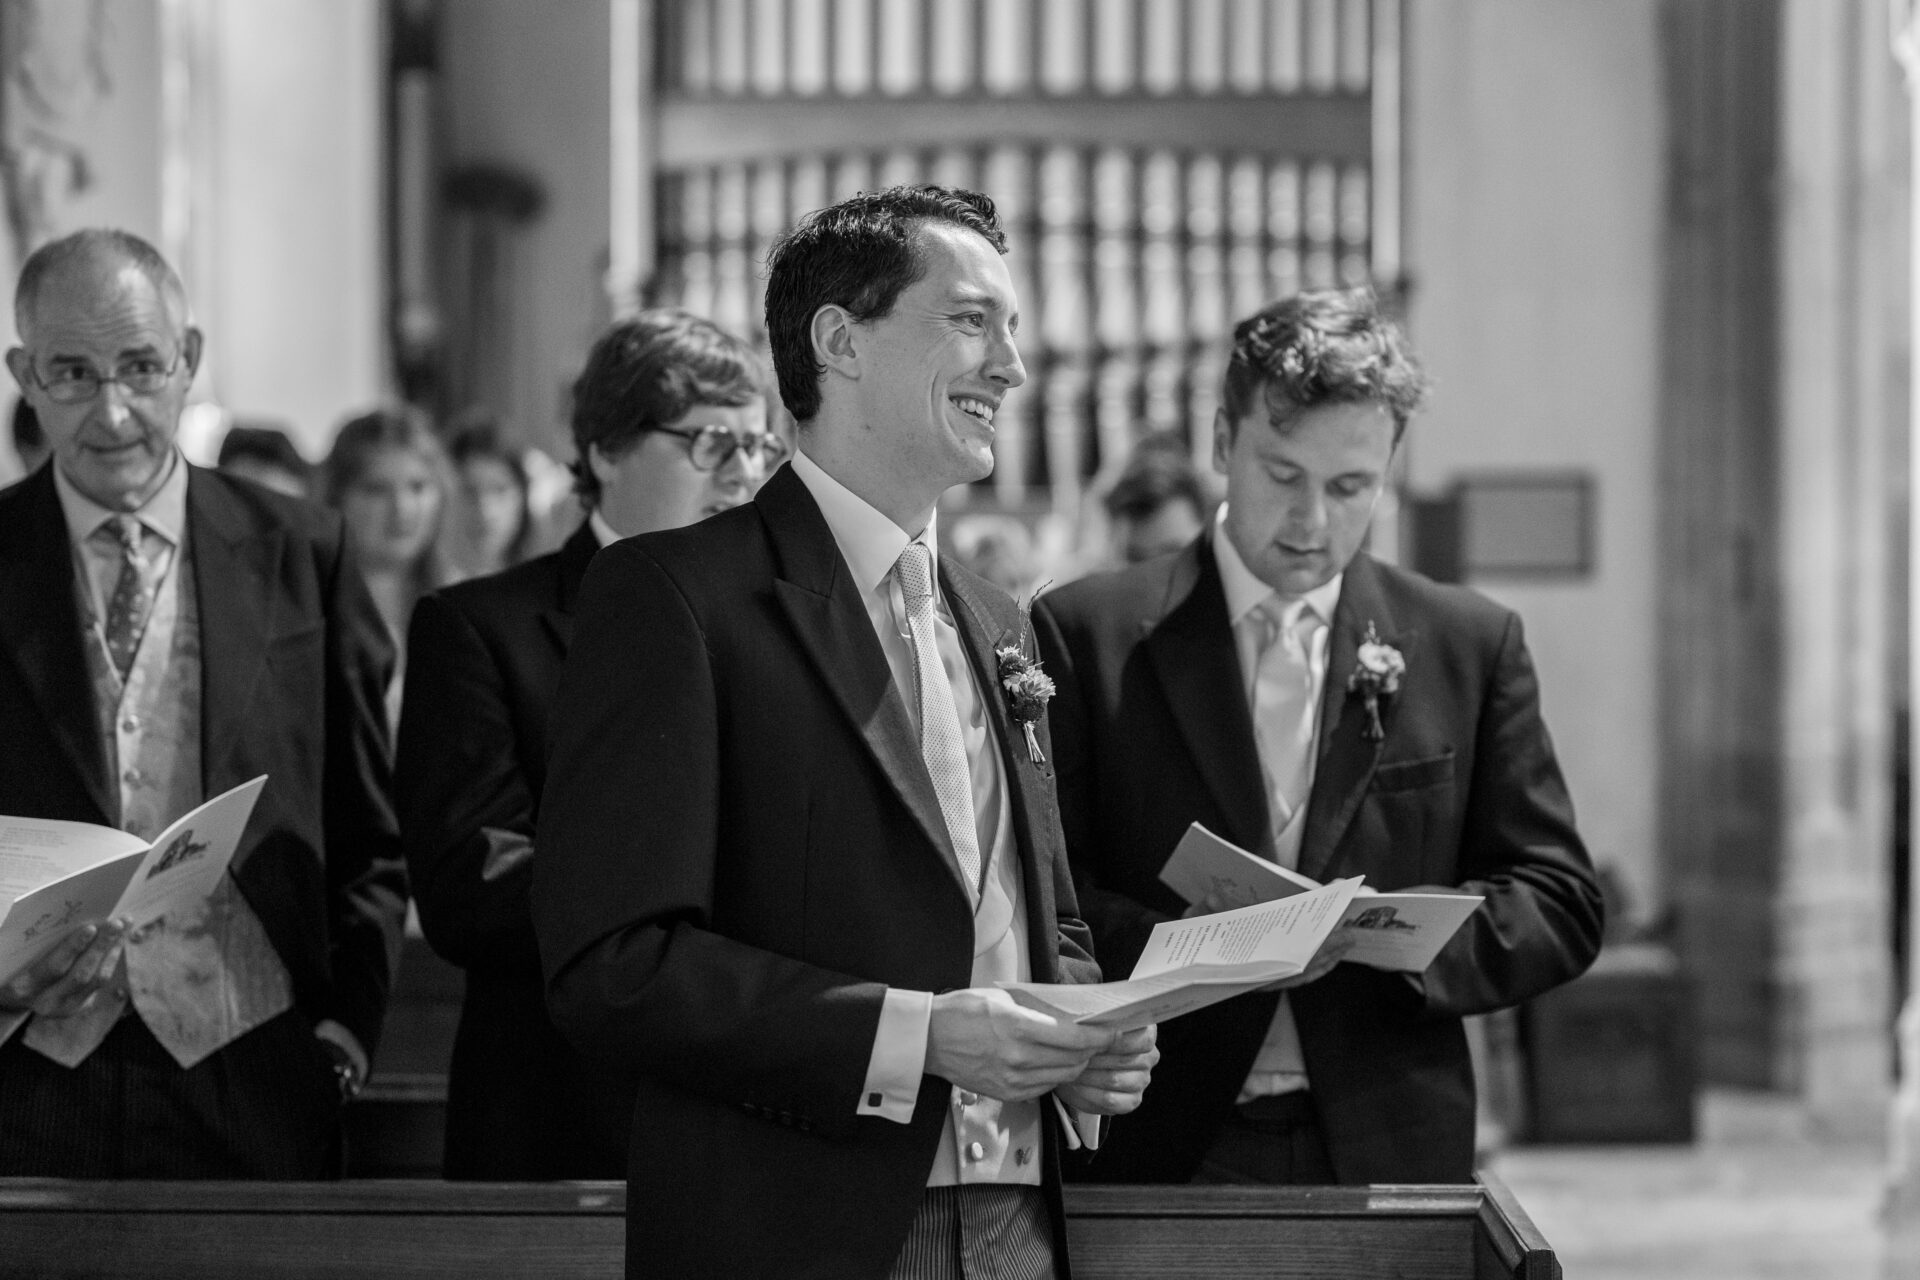 Church wedding ceremony in Somerset